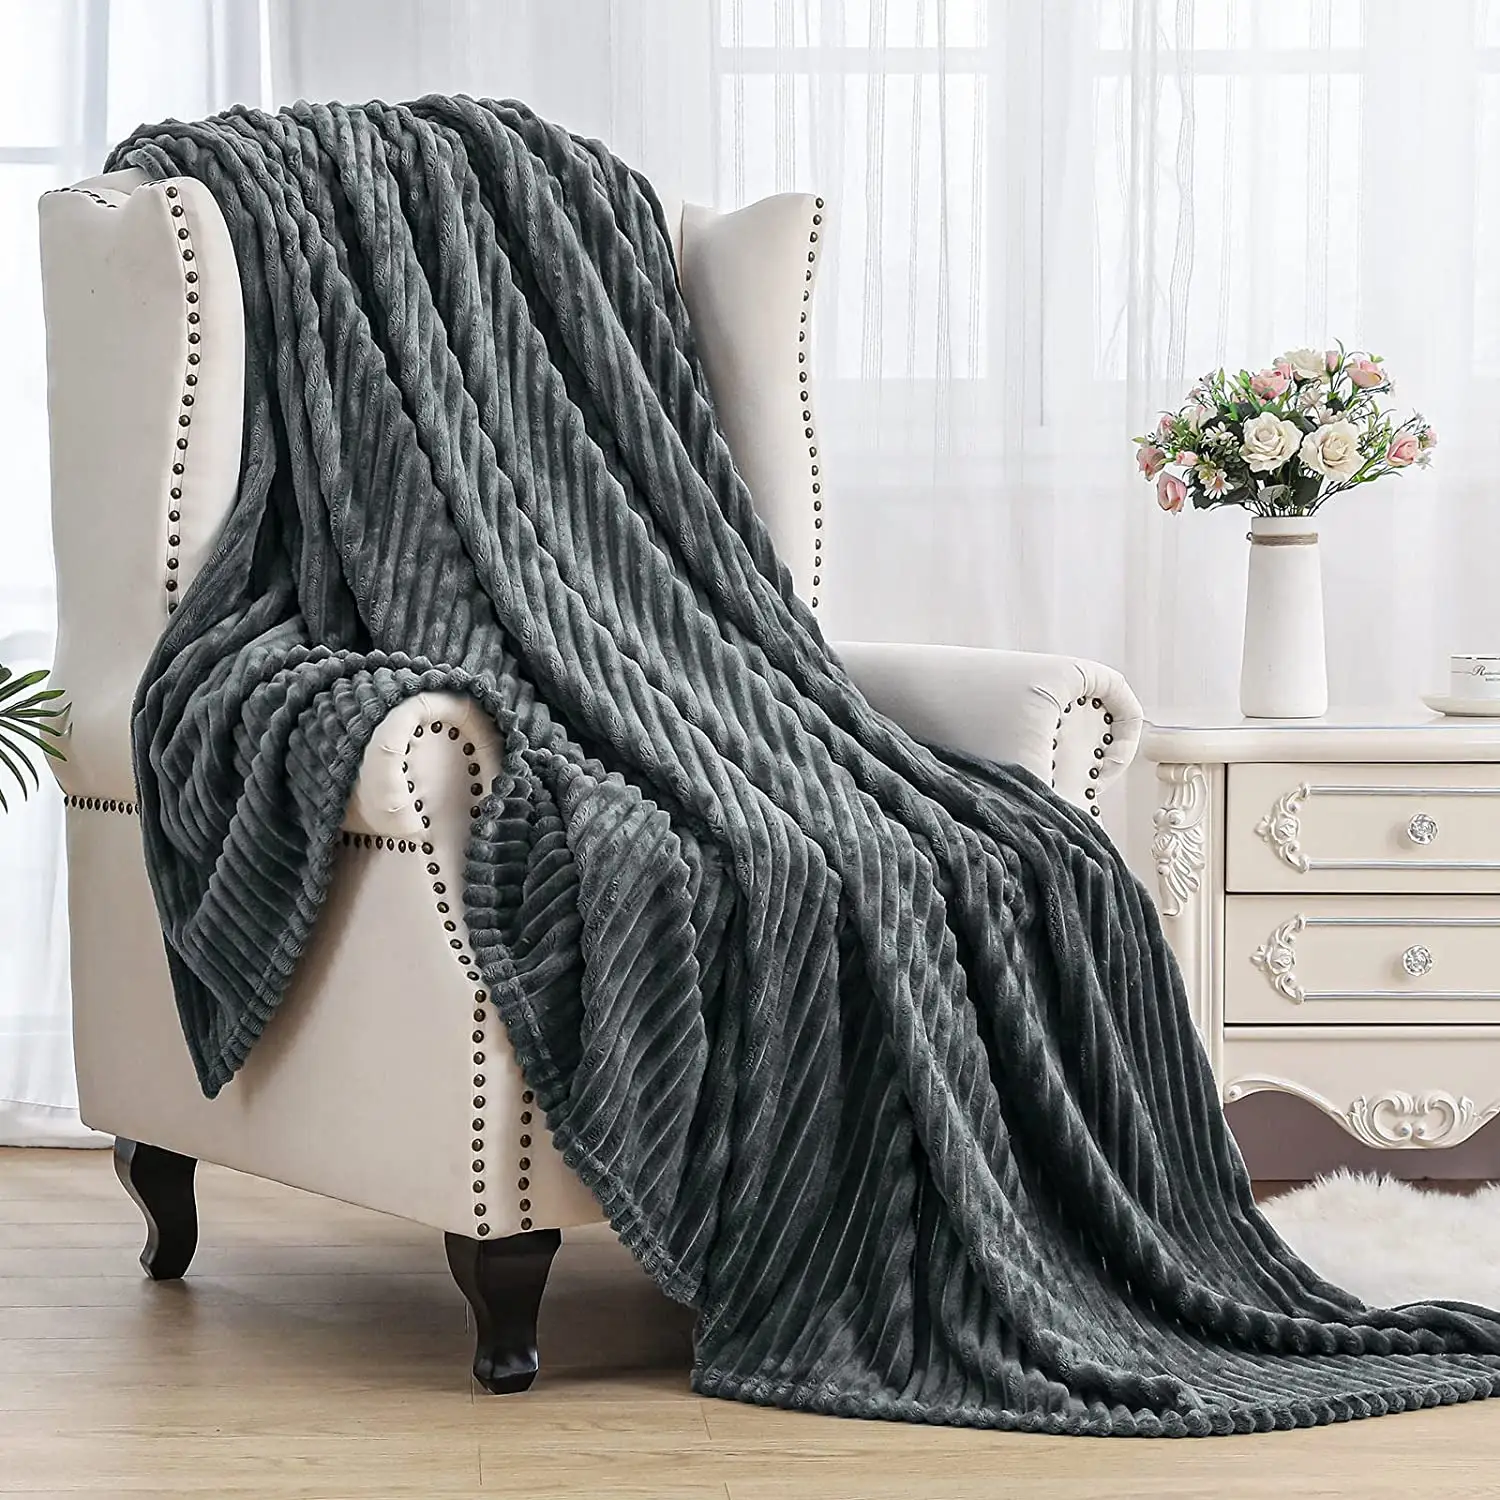 Wholesale Flannel Blanket Solid Rectangle Reversible Stripes Design Soft Cozy Microfiber Polyester Blanket Manufacturer For Sofa